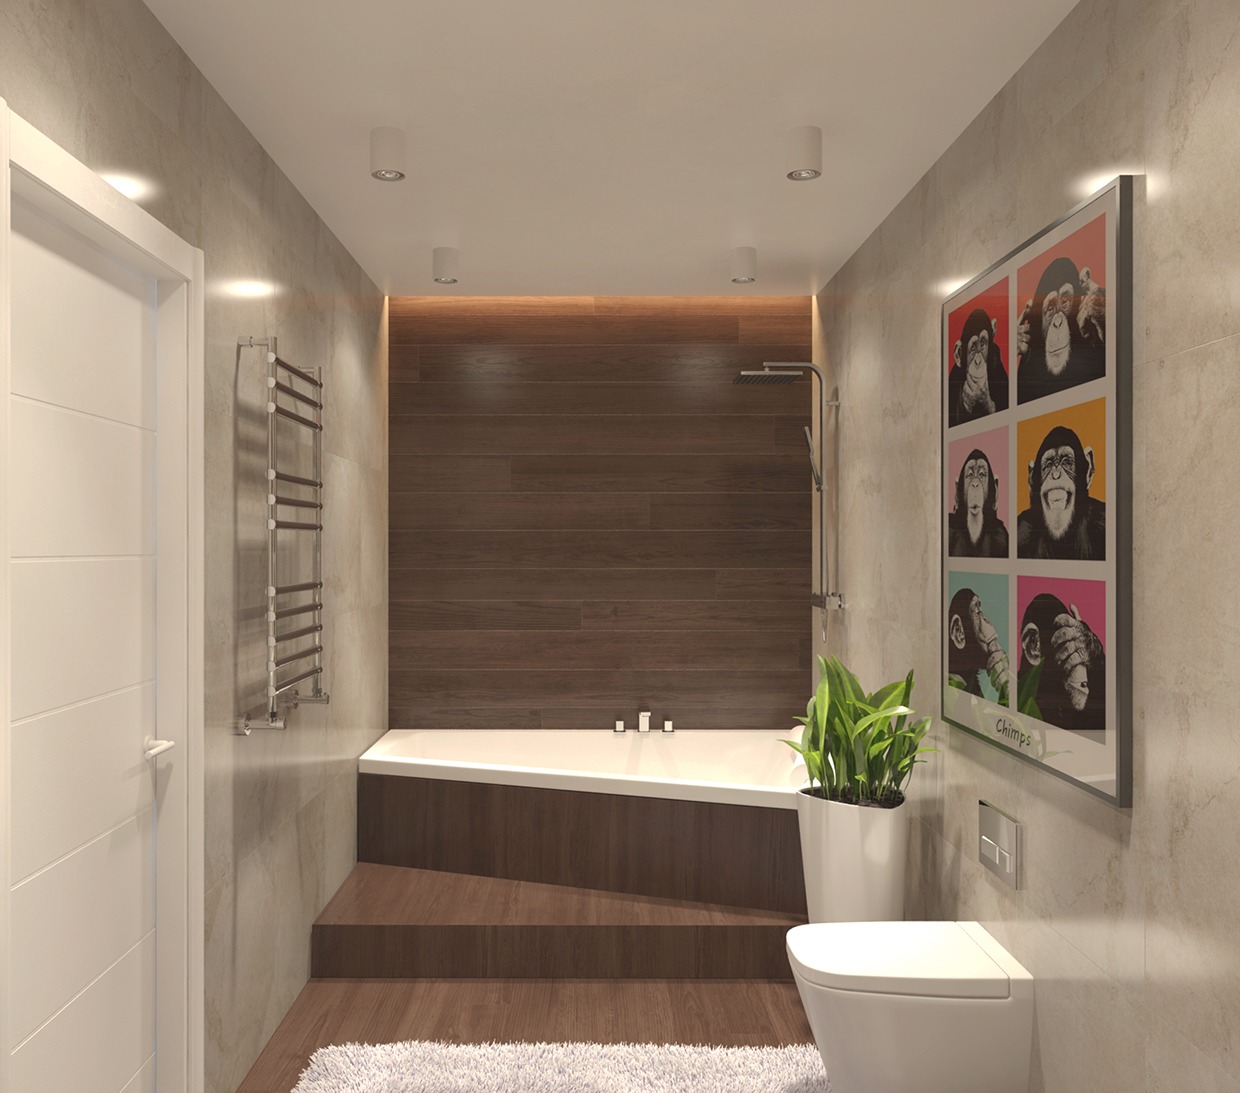 Graphic for bathroom decor "width =" 1240 "height =" 1093 "srcset =" https://mileray.com/wp-content/uploads/2020/05/1588515869_830_Inspiration-To-Arrange-Minimalist-Bathroom-Designs-With-Backsplash-Decorating-Ideas.jpg 1240w, https://mileray.com / wp-content / uploads / 2016/10 / Pavel-Voytov-300x264.jpg 300w, https://mileray.com/wp-content/uploads/2016/10/Pavel-Voytov-768x677.jpg 768w, https: / / mileray.com/wp-content/uploads/2016/10/Pavel-Voytov-1024x903.jpg 1024w, https://mileray.com/wp-content/uploads/2016/10/Pavel-Voytov-696x613.jpg 696w, https://mileray.com/wp-content/uploads/2016/10/Pavel-Voytov-1068x941.jpg 1068w, https://mileray.com/wp-content/uploads/2016/10/Pavel-Voytov- 476x420 .jpg 476w "sizes =" (maximum width: 1240px) 100vw, 1240px